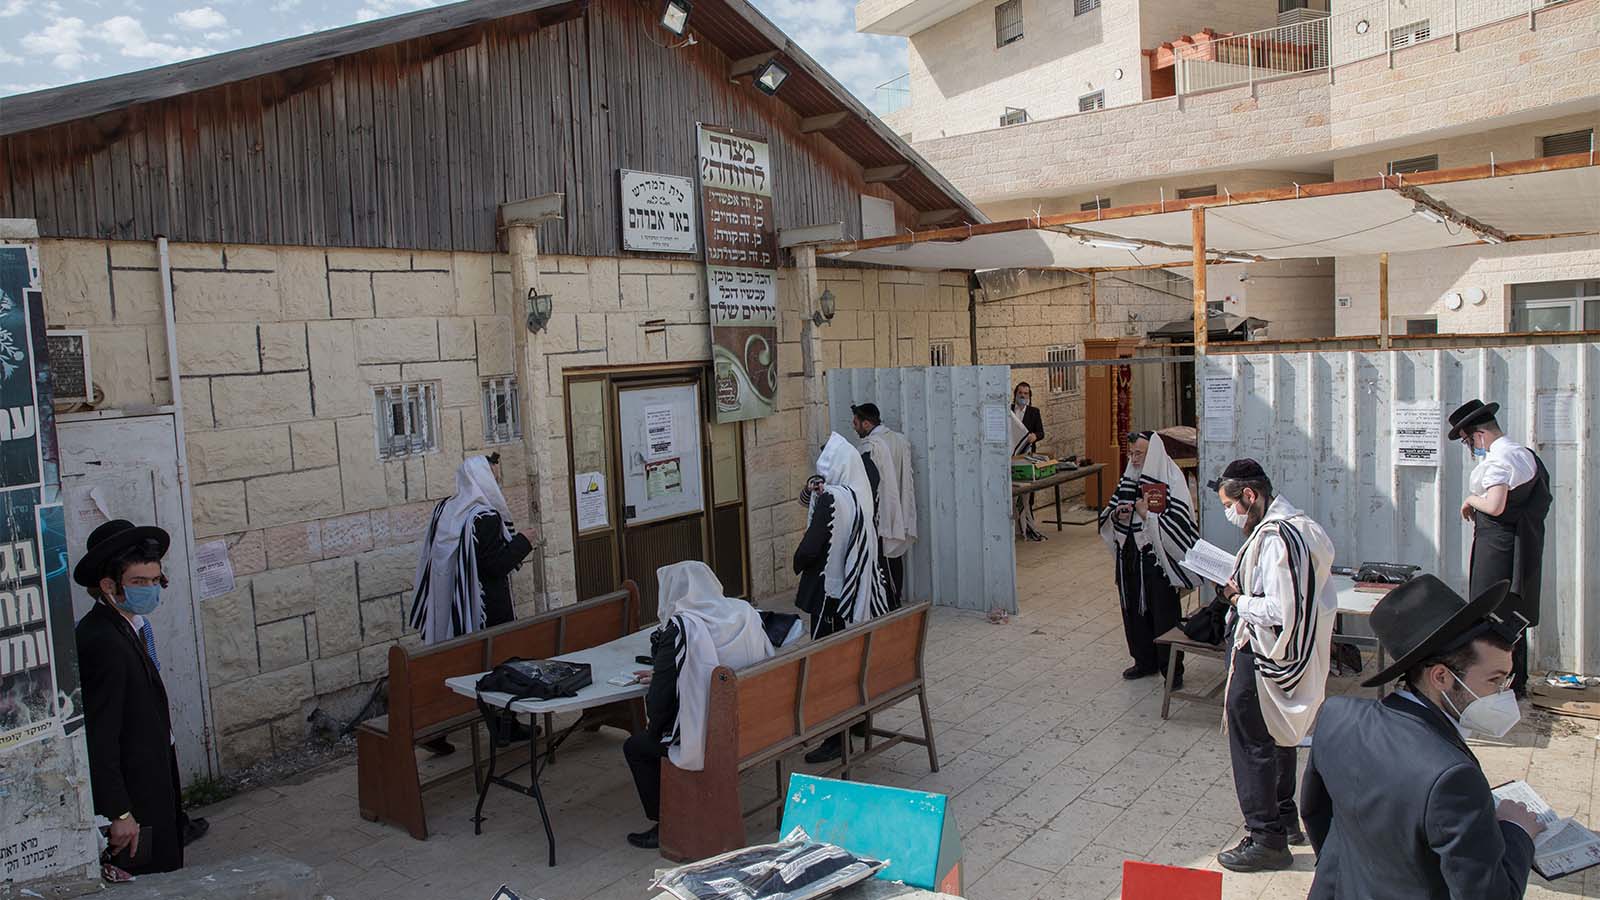 Shtiblach in Beitar Illit. (Photo: Nati Shohat/Flash90)